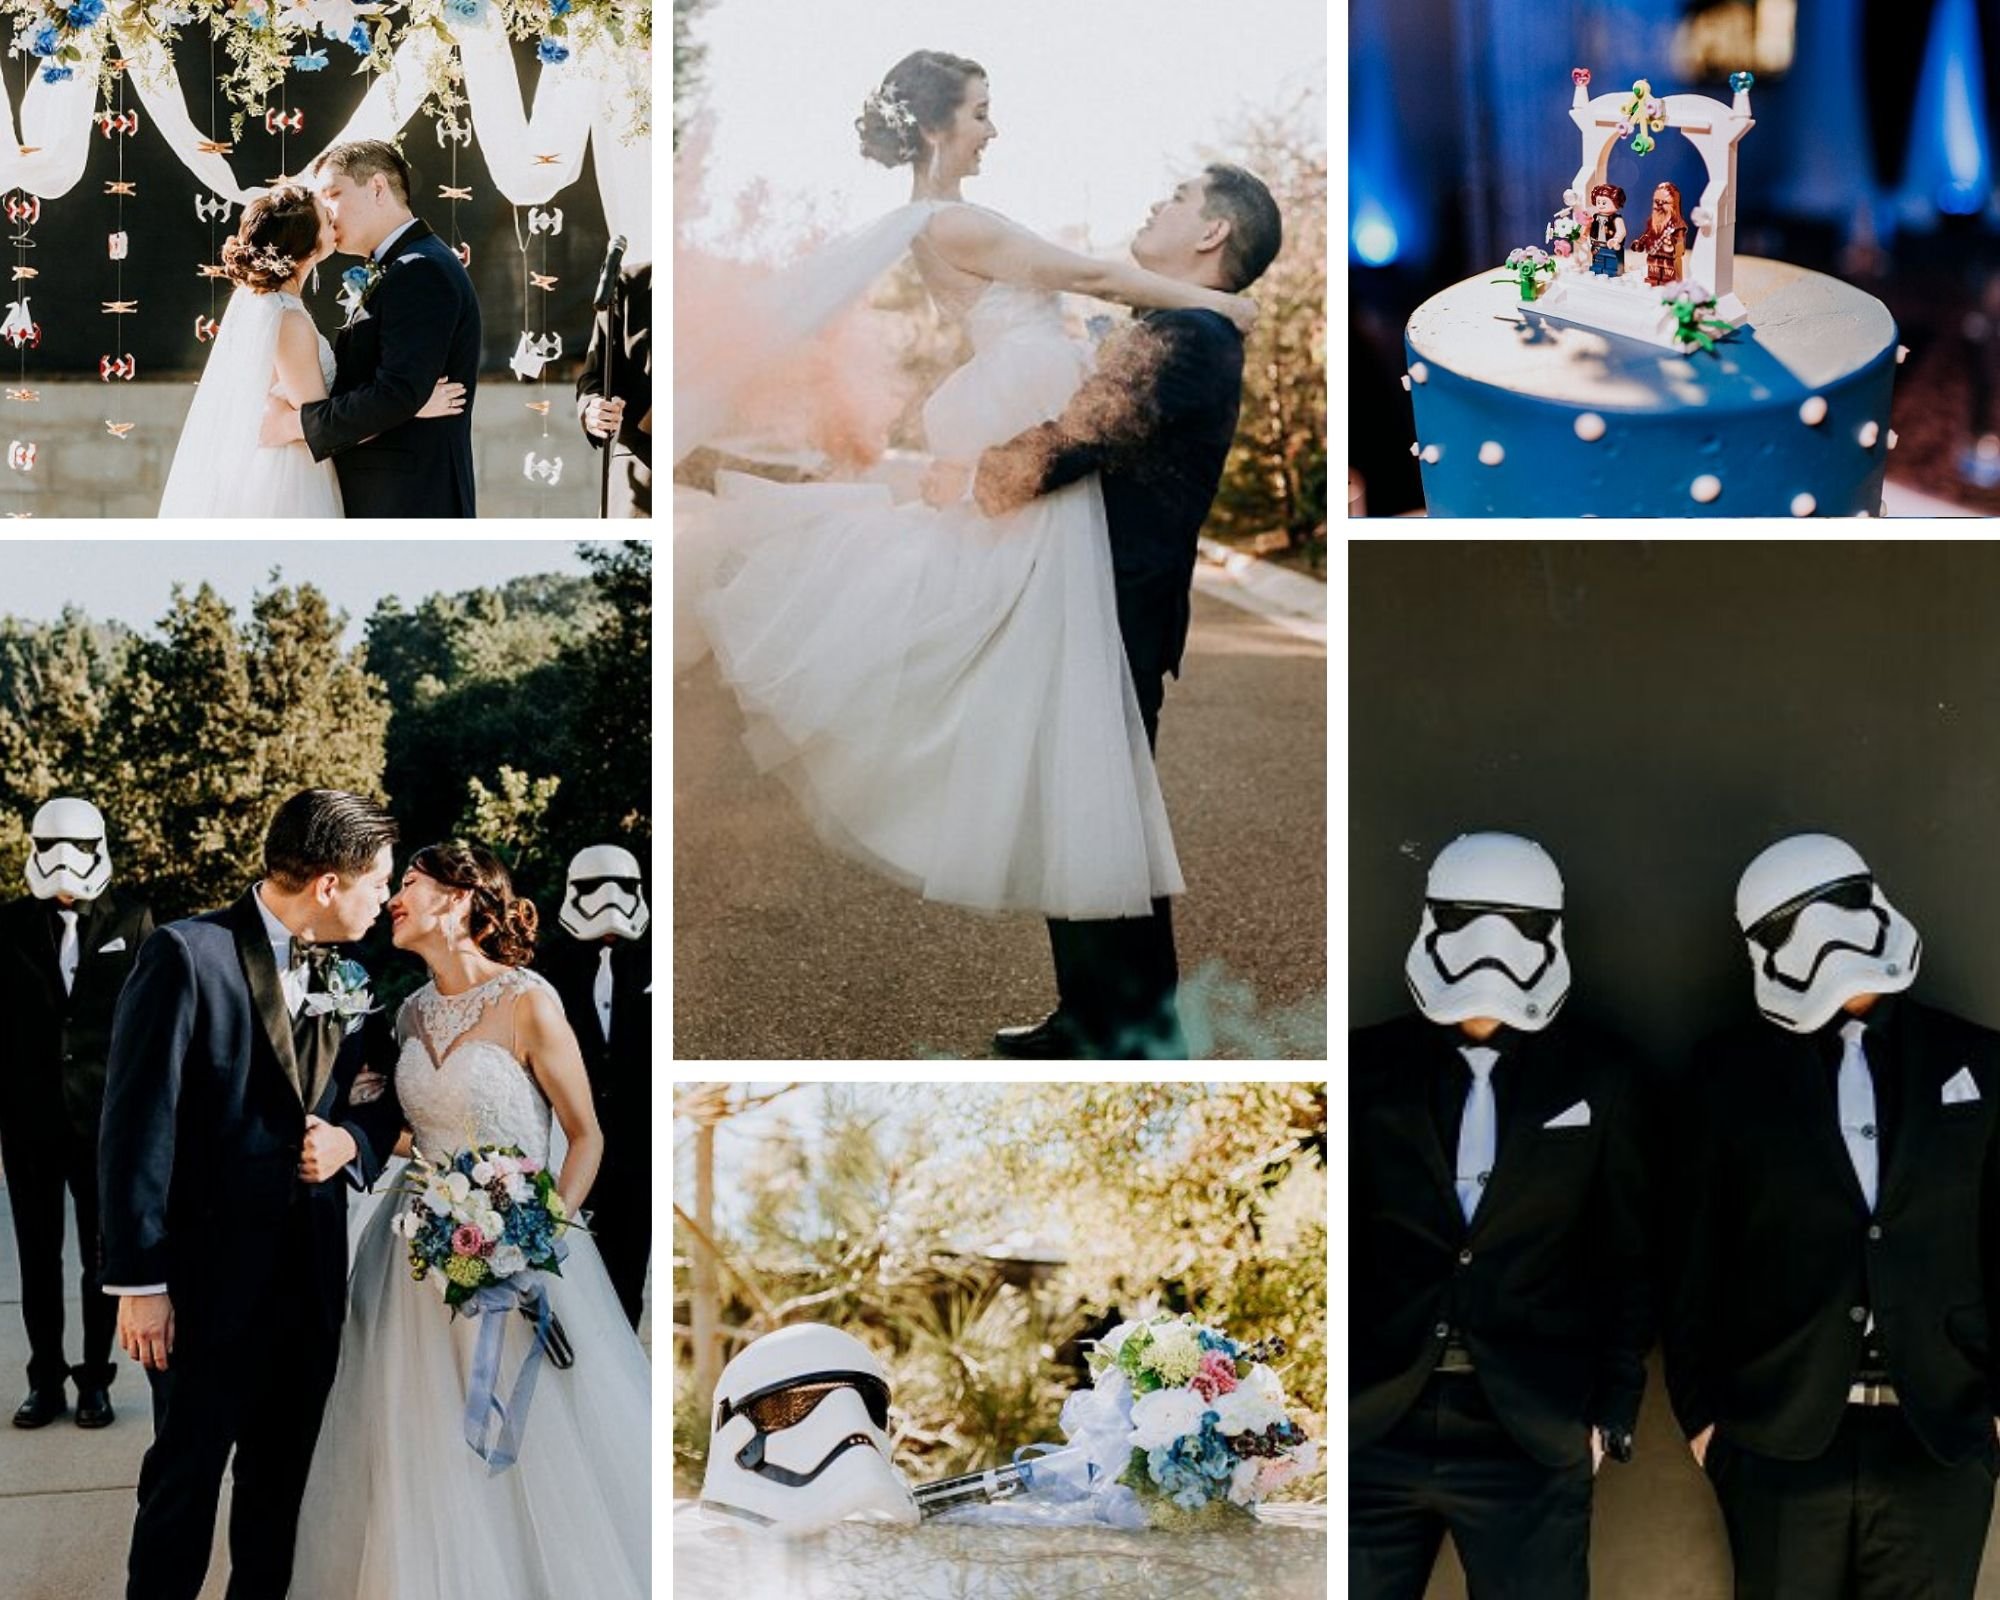 https://www.wedgewoodweddings.com/hs-fs/hubfs/starwars-legos-wedding-socal.jpg?width=2000&name=starwars-legos-wedding-socal.jpg